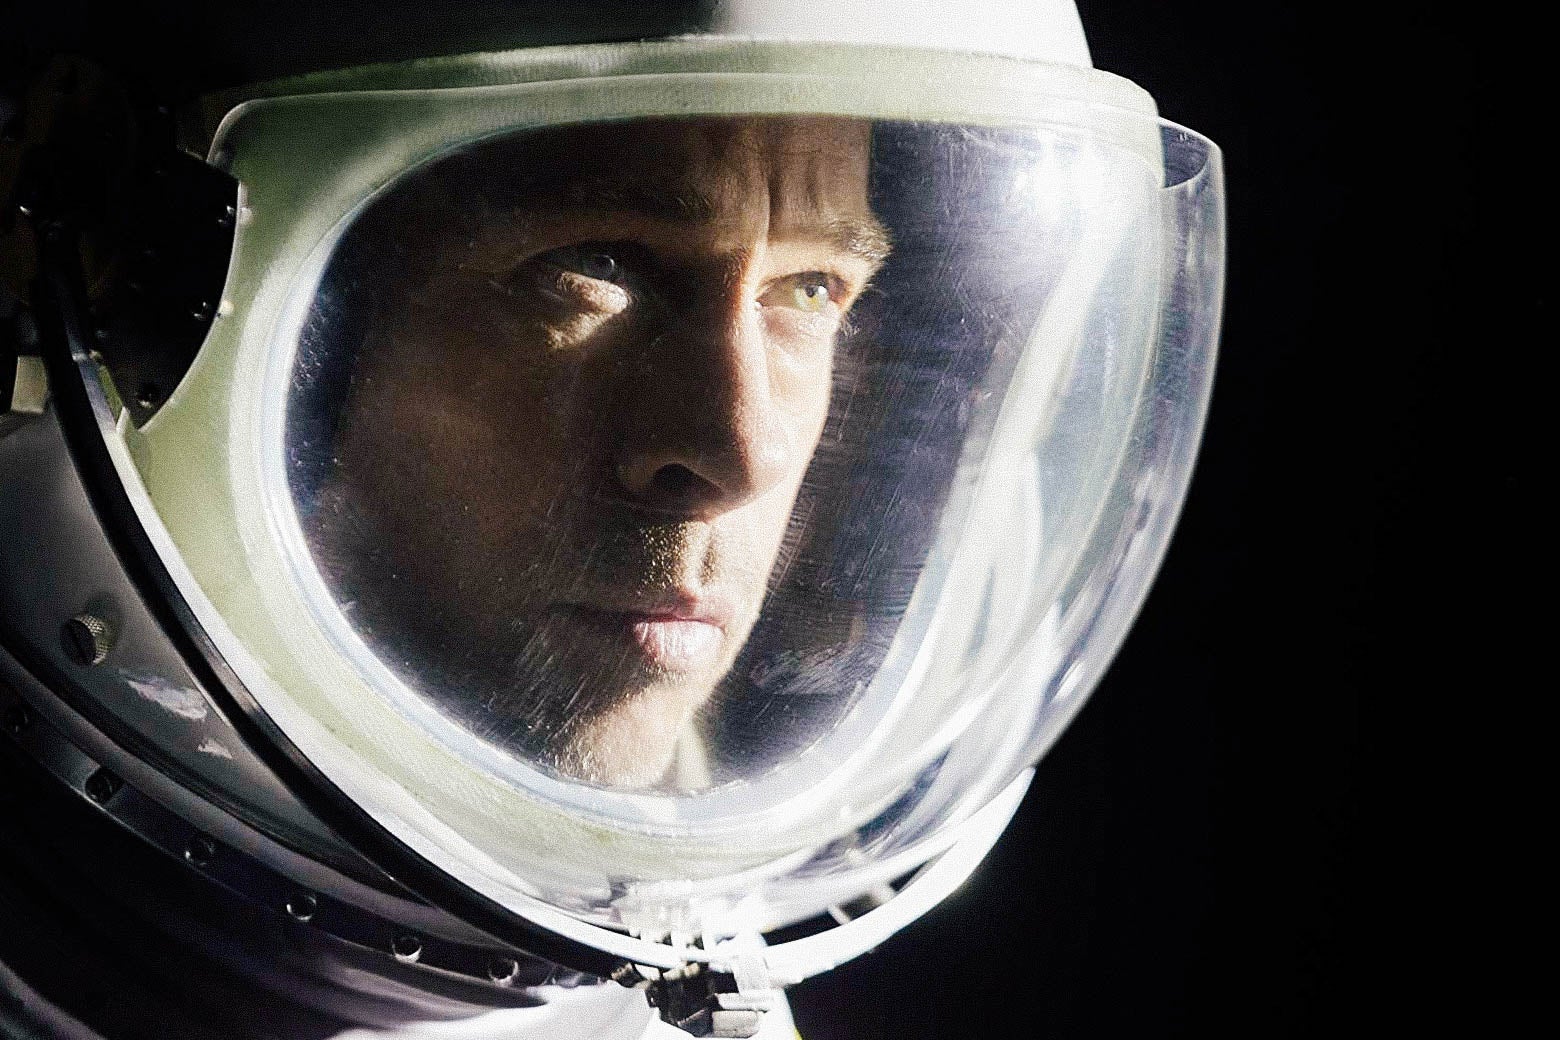 Brad Pitt in full astronaut gear as Roy McBride in Ad Astra